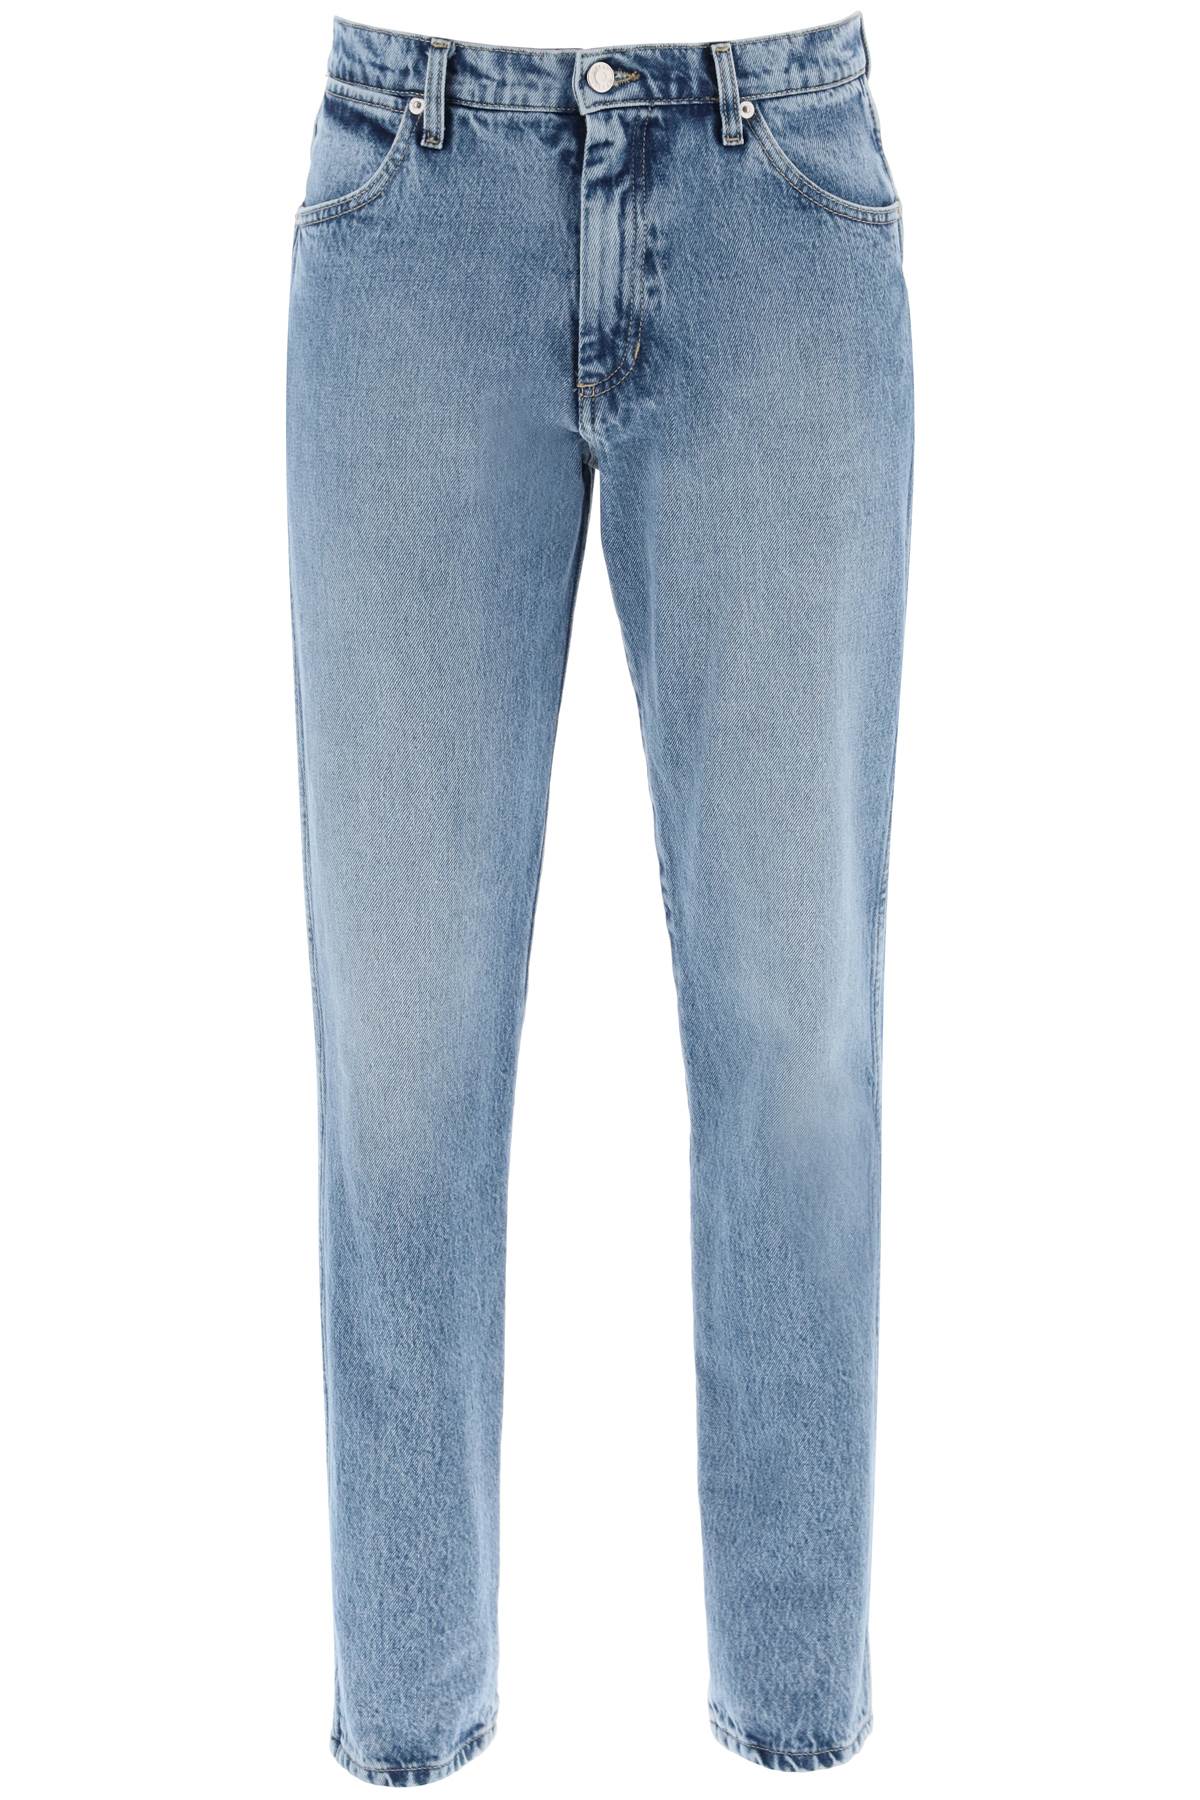 Bally straight cut jeans MTR00A LIGHT BLUE